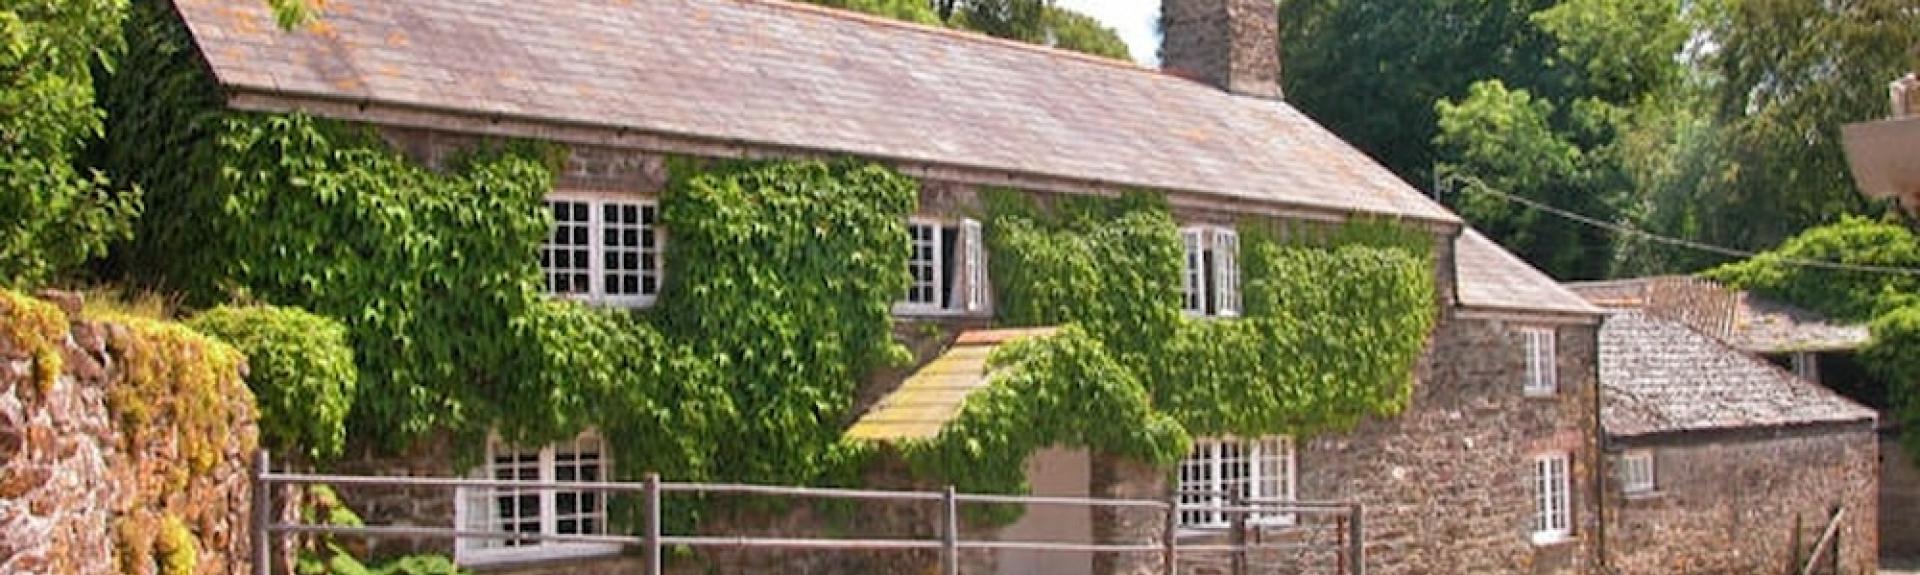 Exterior of a bushy ivy-clad Dartmoor farmhouse.